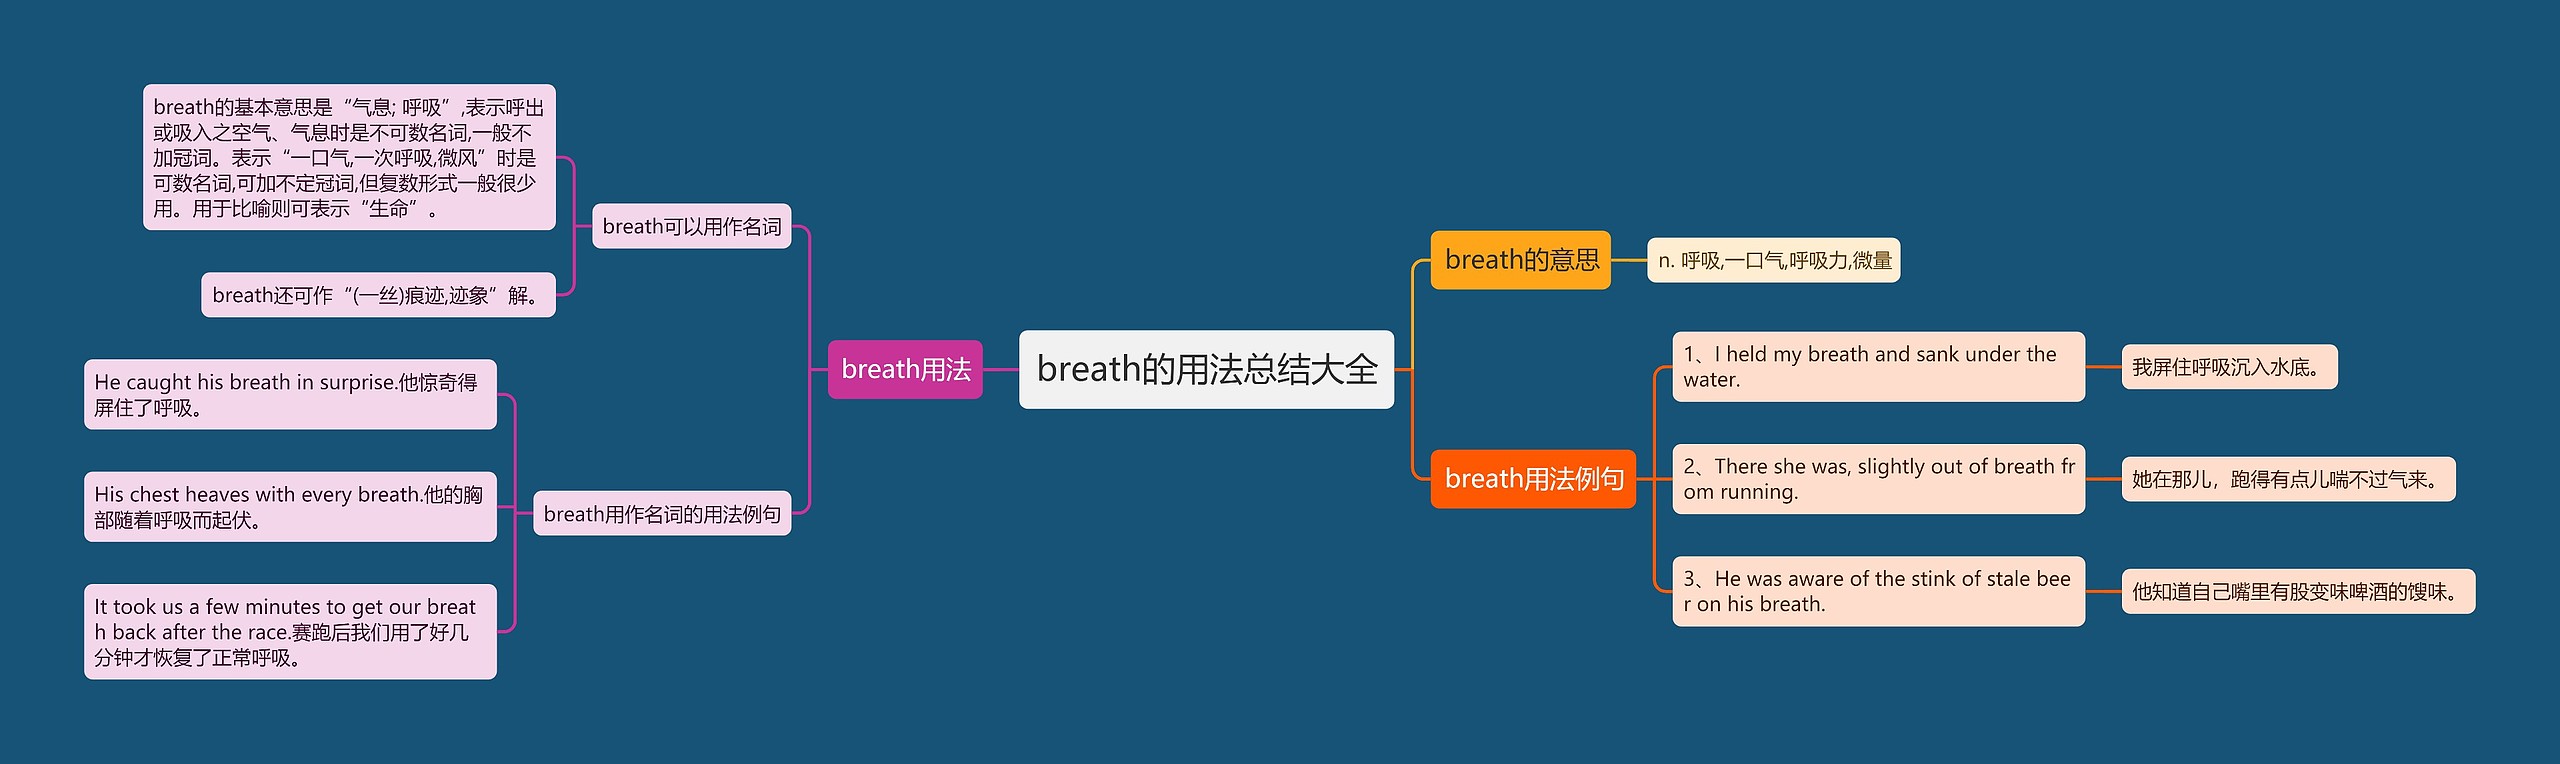 breath的用法总结大全思维导图